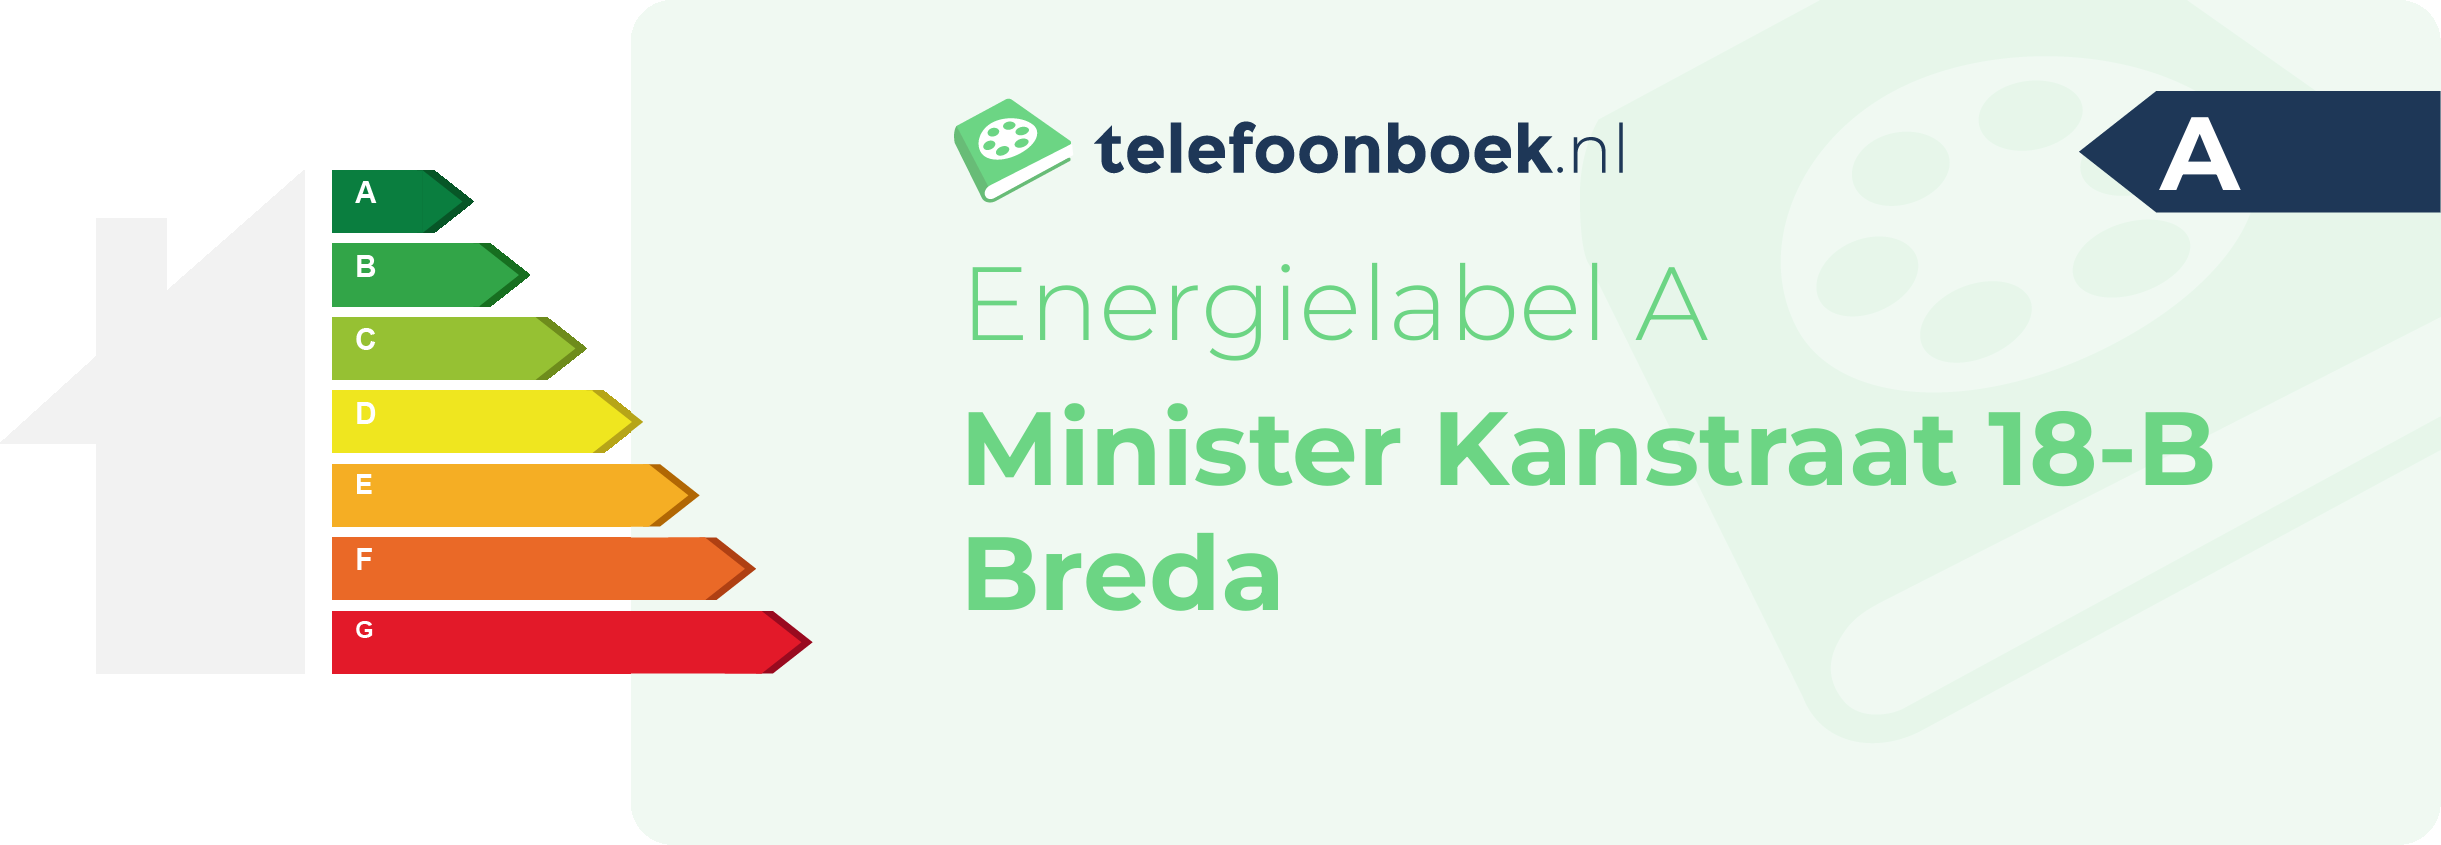 Energielabel Minister Kanstraat 18-B Breda